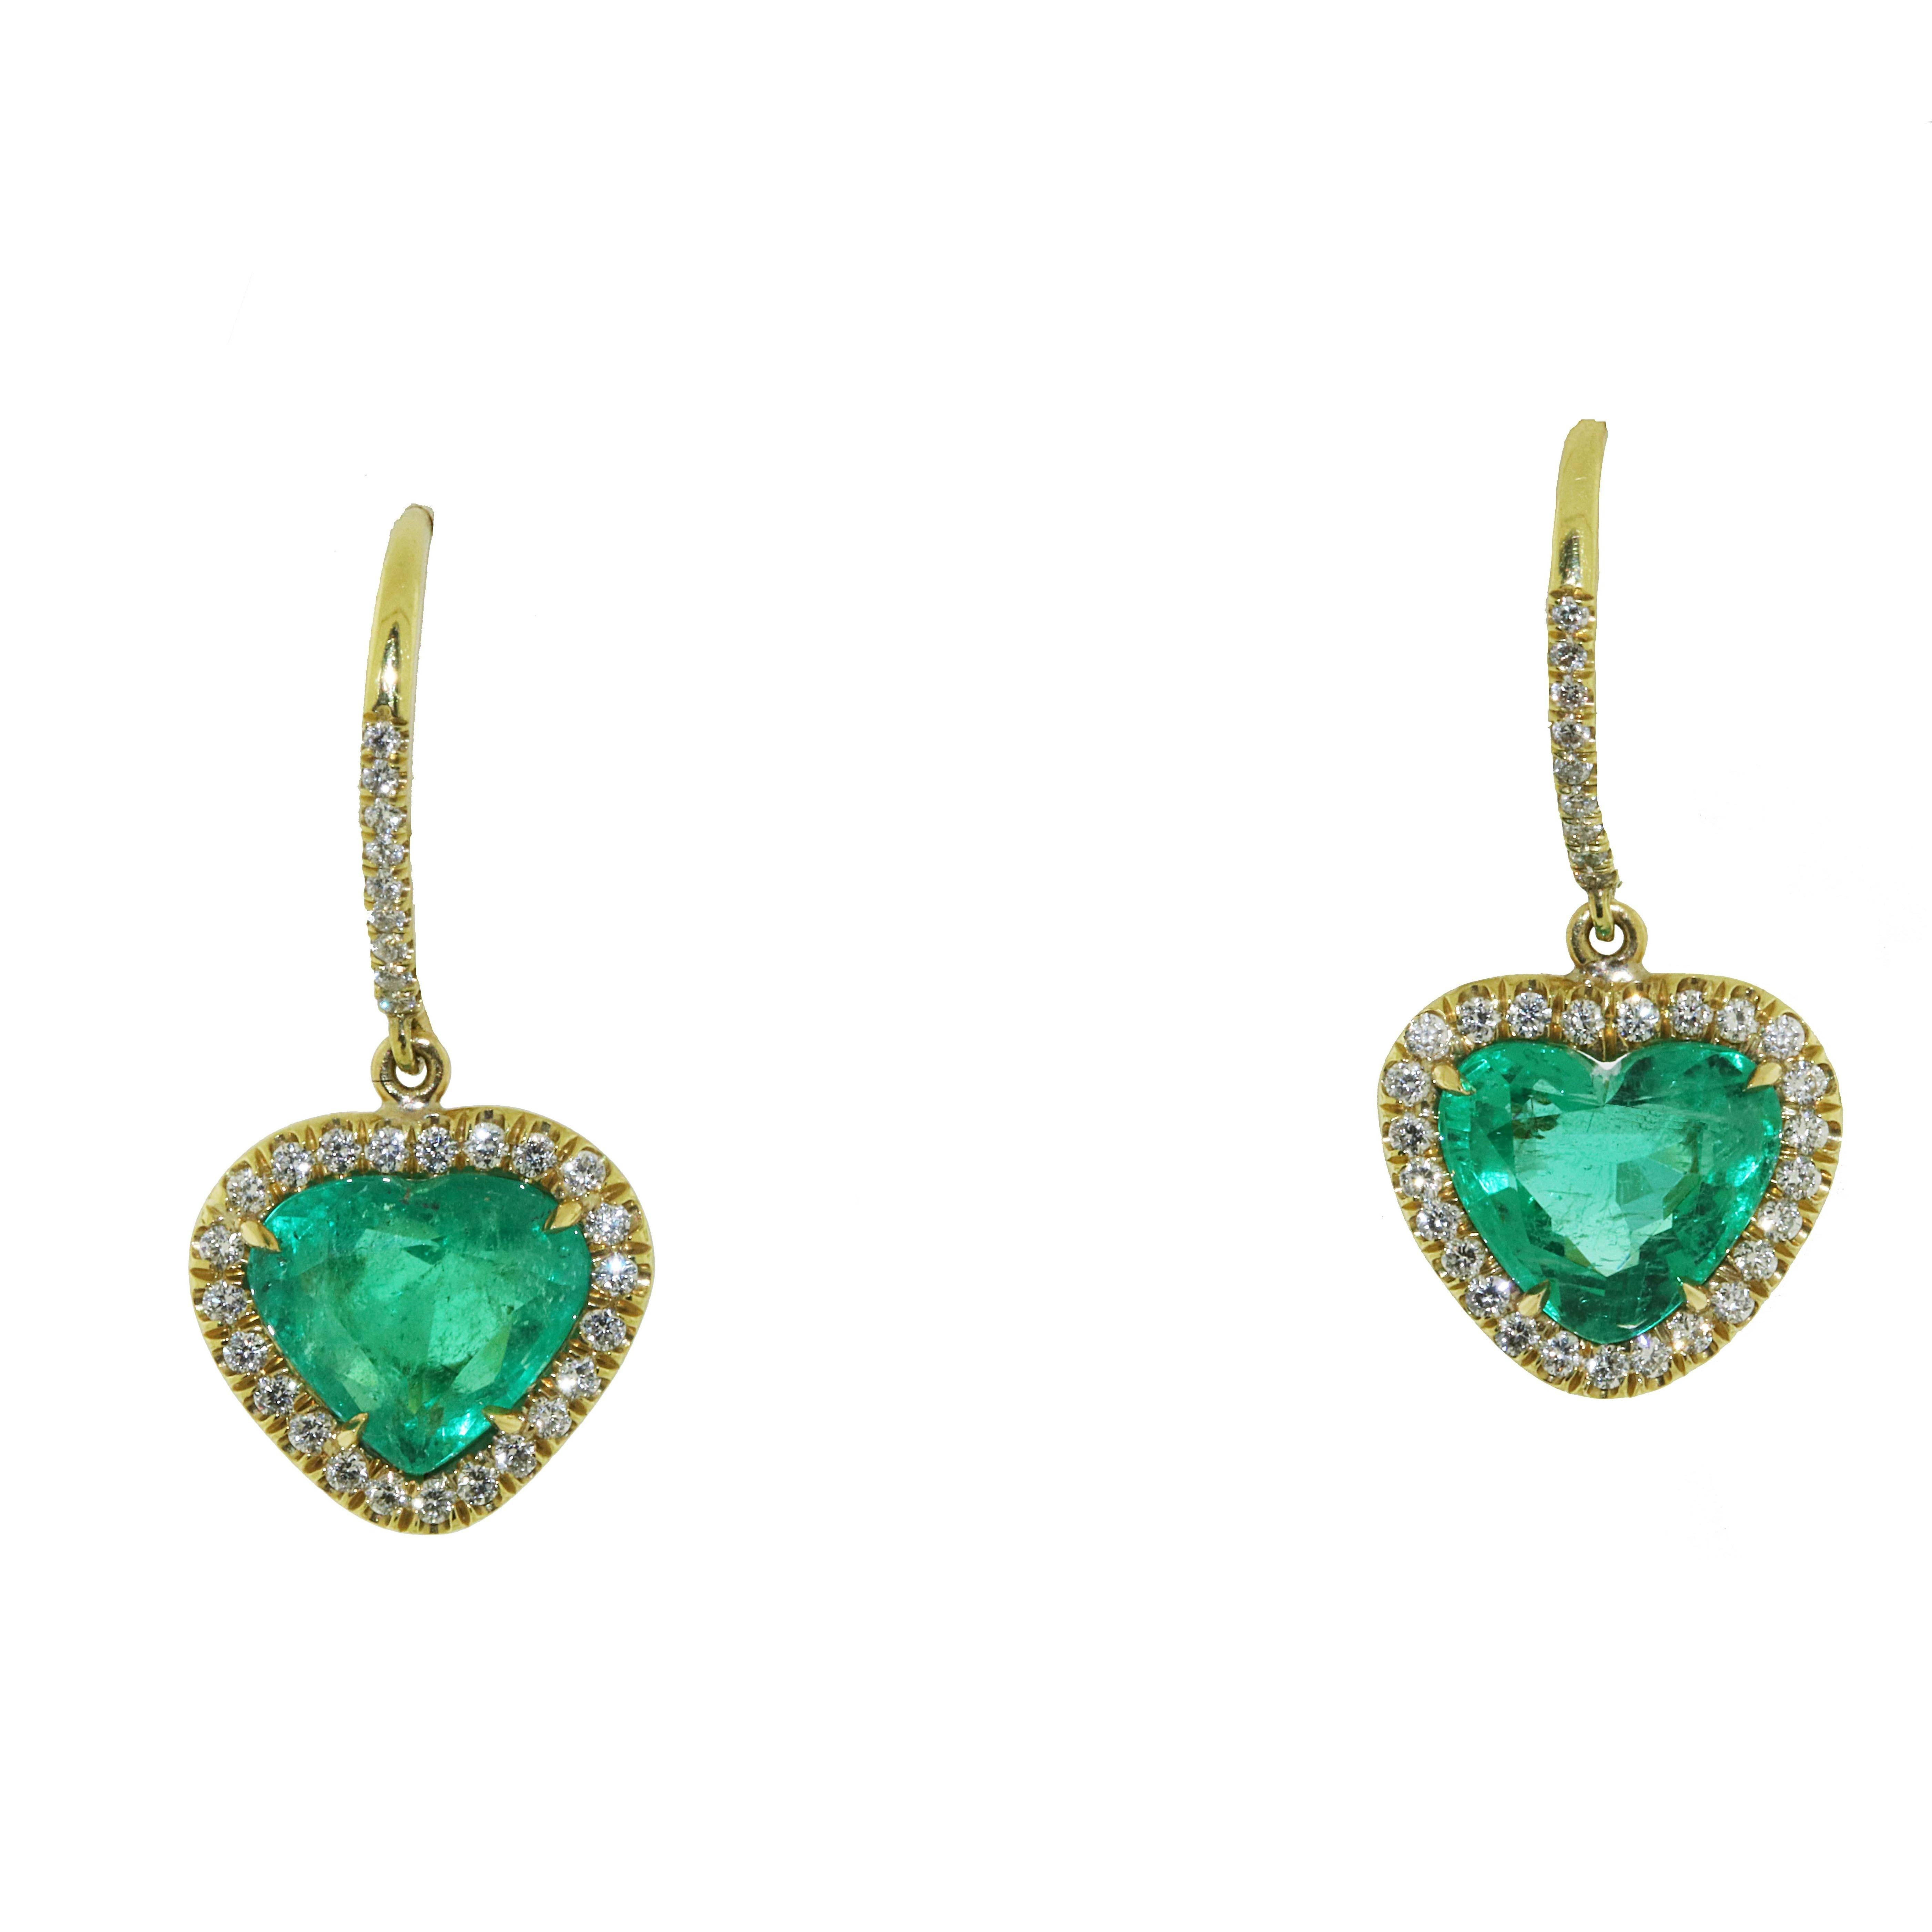 3.79 Carat Green Emerald Drop Heart Shape Earrings with Diamonds in Yellow Gold